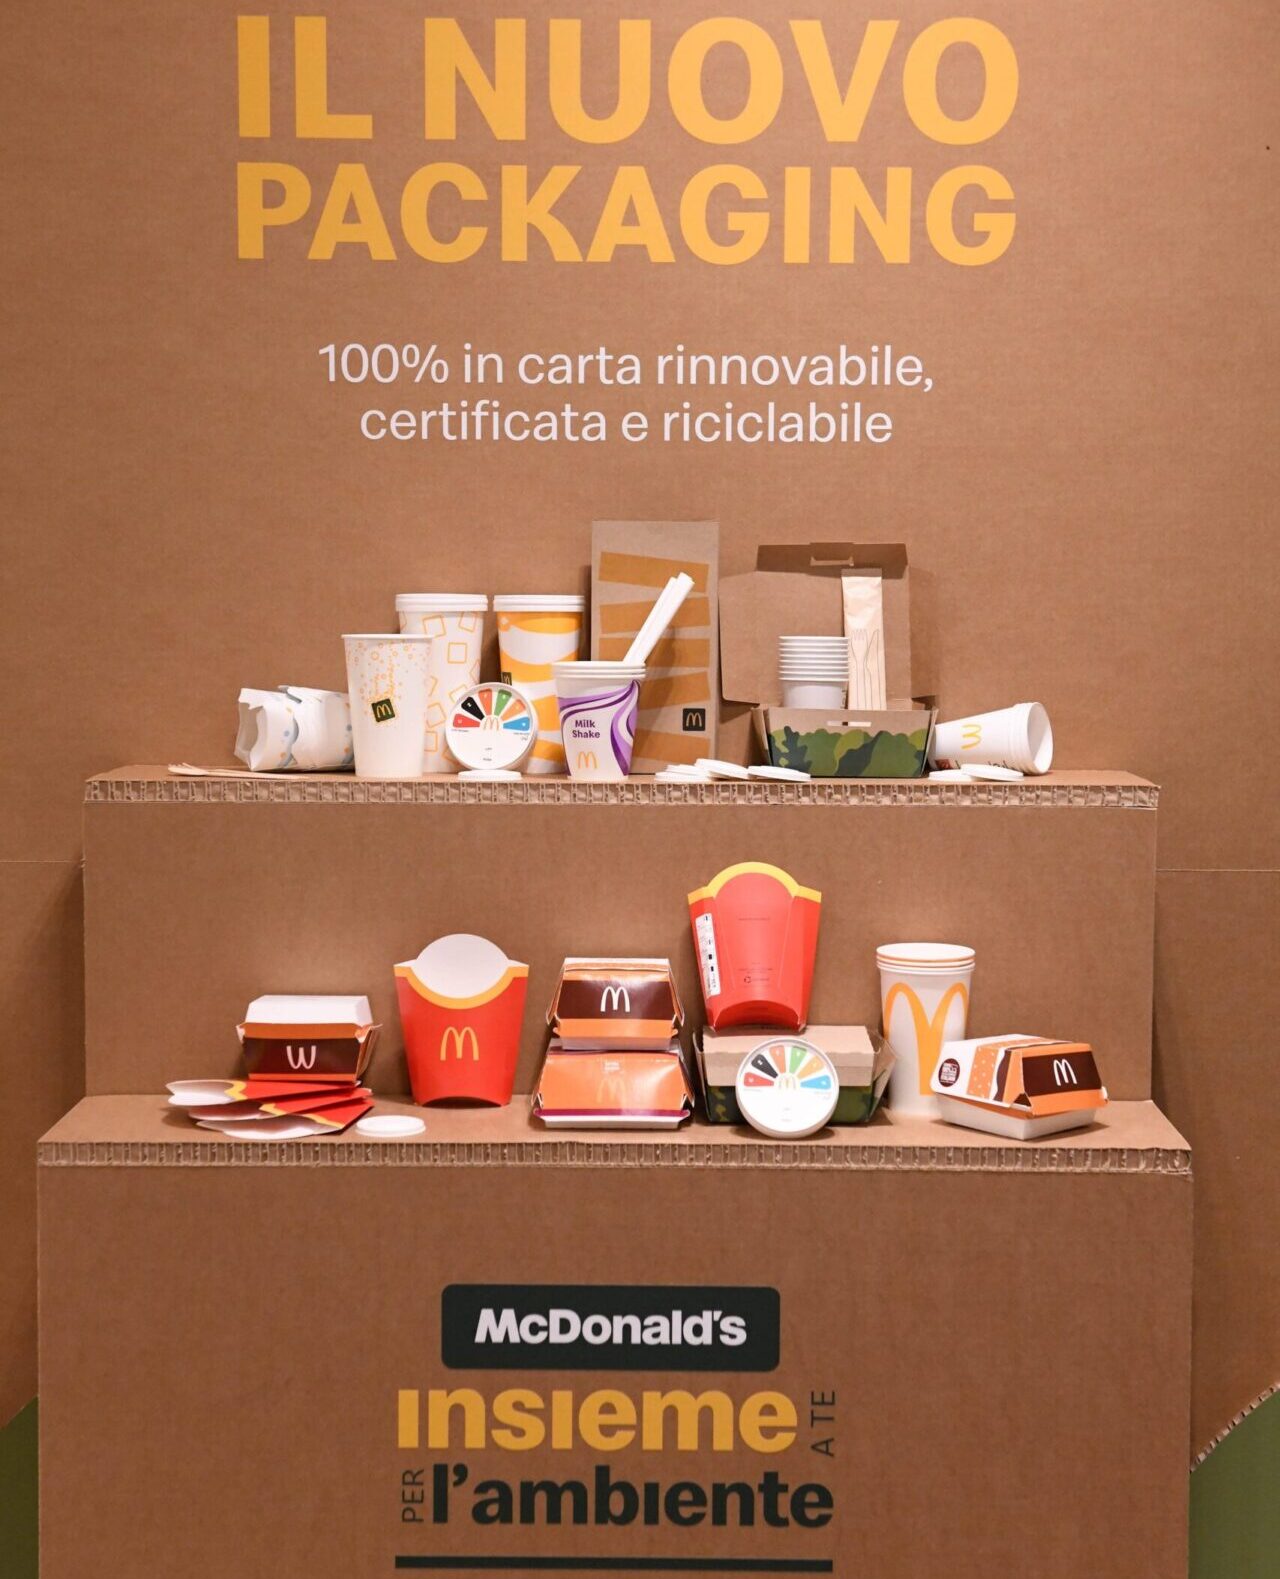 mcdonald's packaging sostenibile